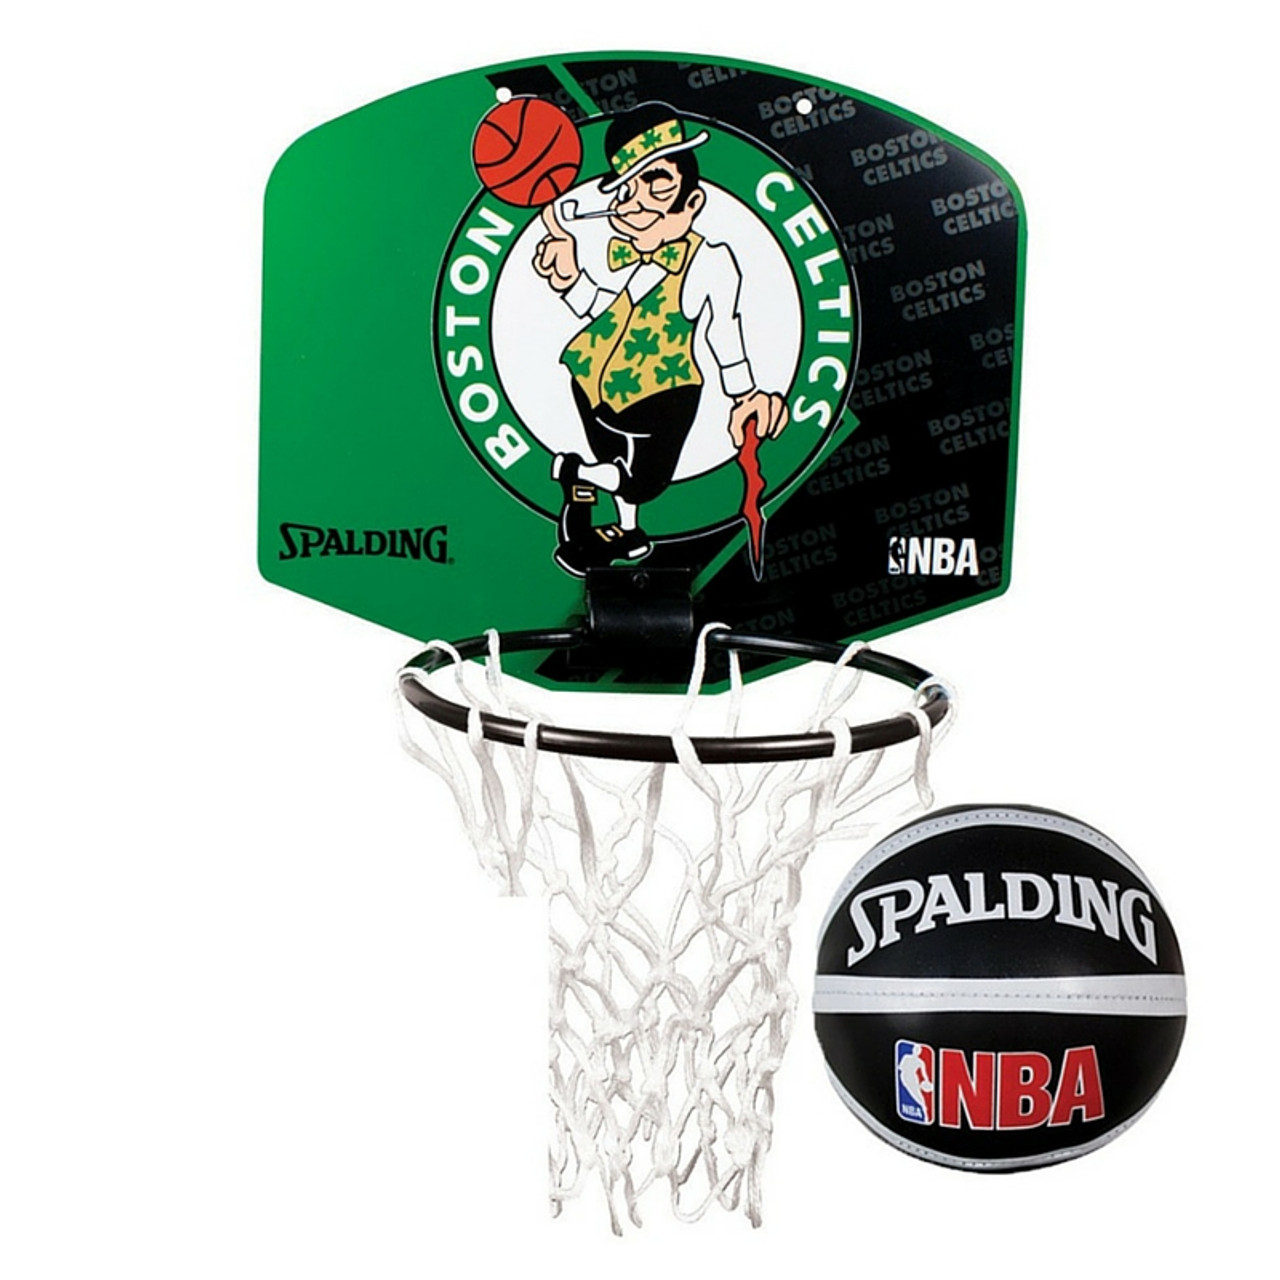 boston celtics mini basketball